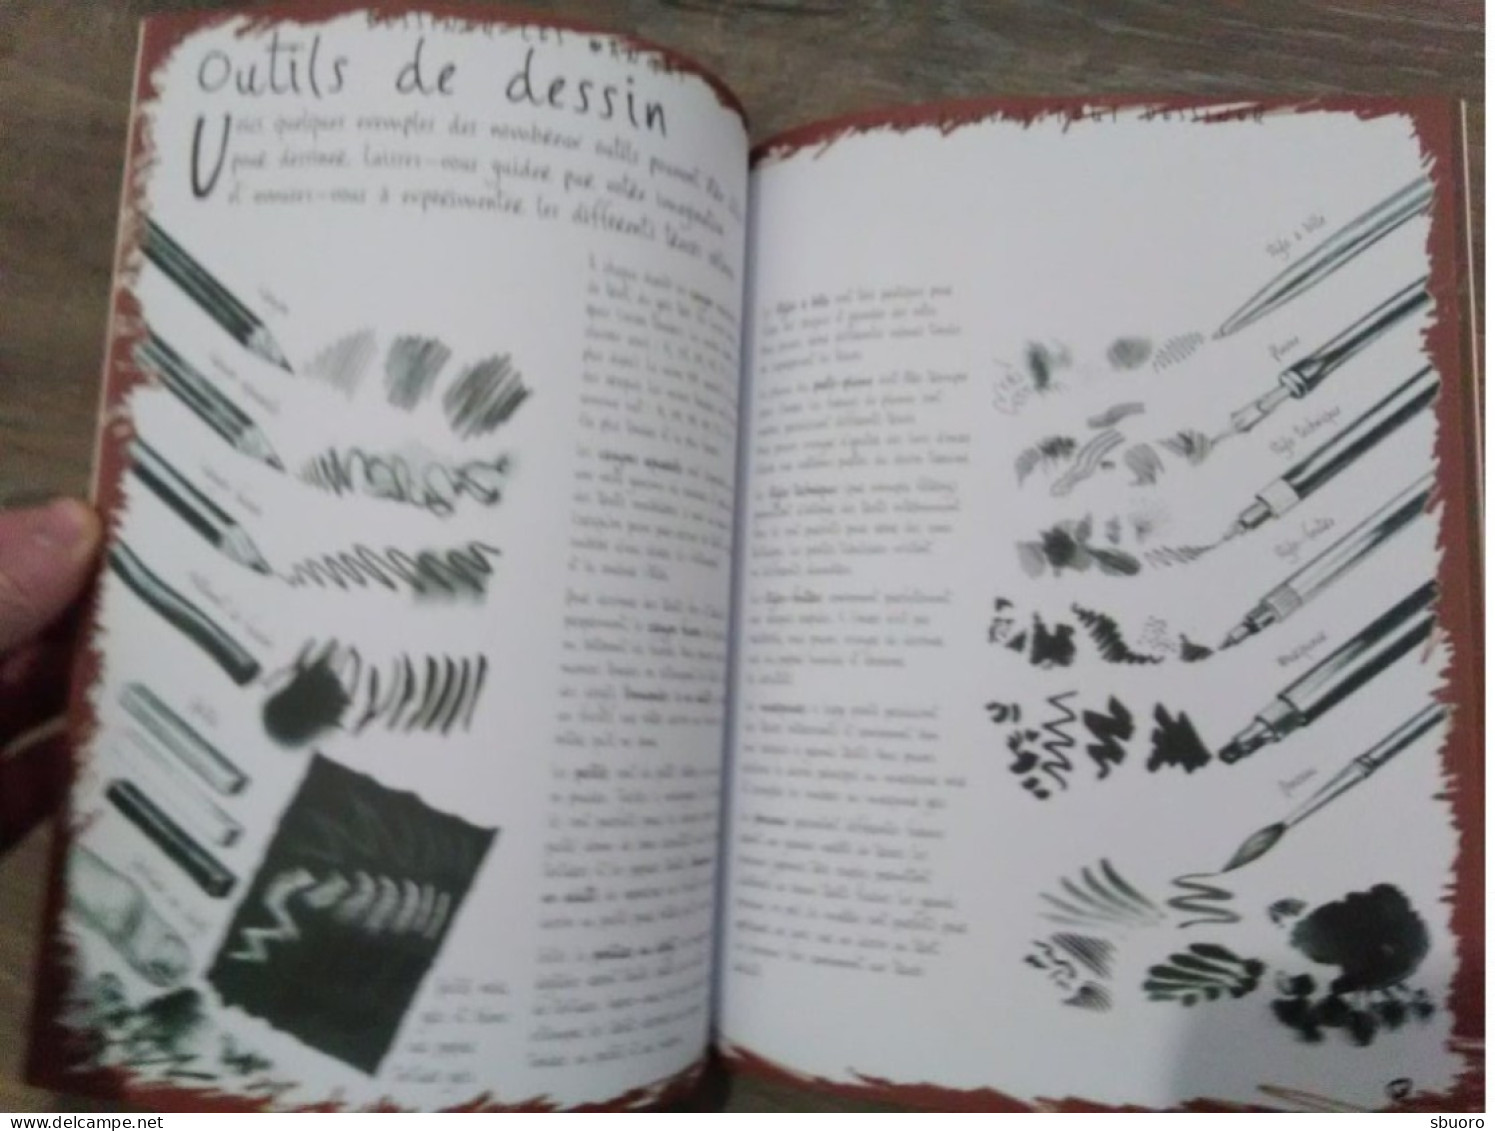 Dessiner Les Mangas. David Atram. Editions Eyrolles - Andere & Zonder Classificatie